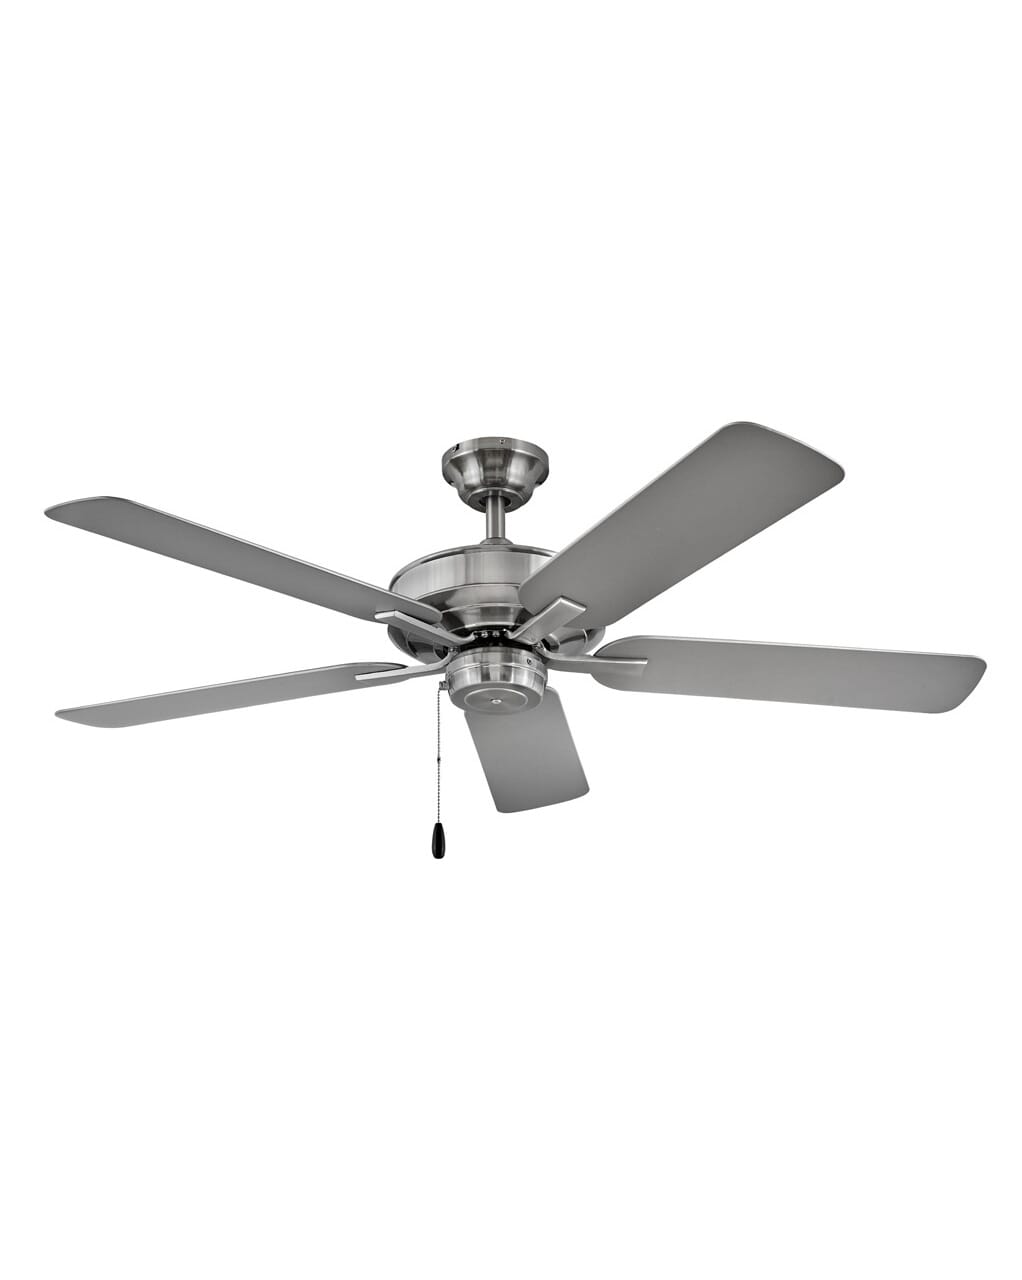 52" Outdoor Ceiling Fan in Brushed Nickel